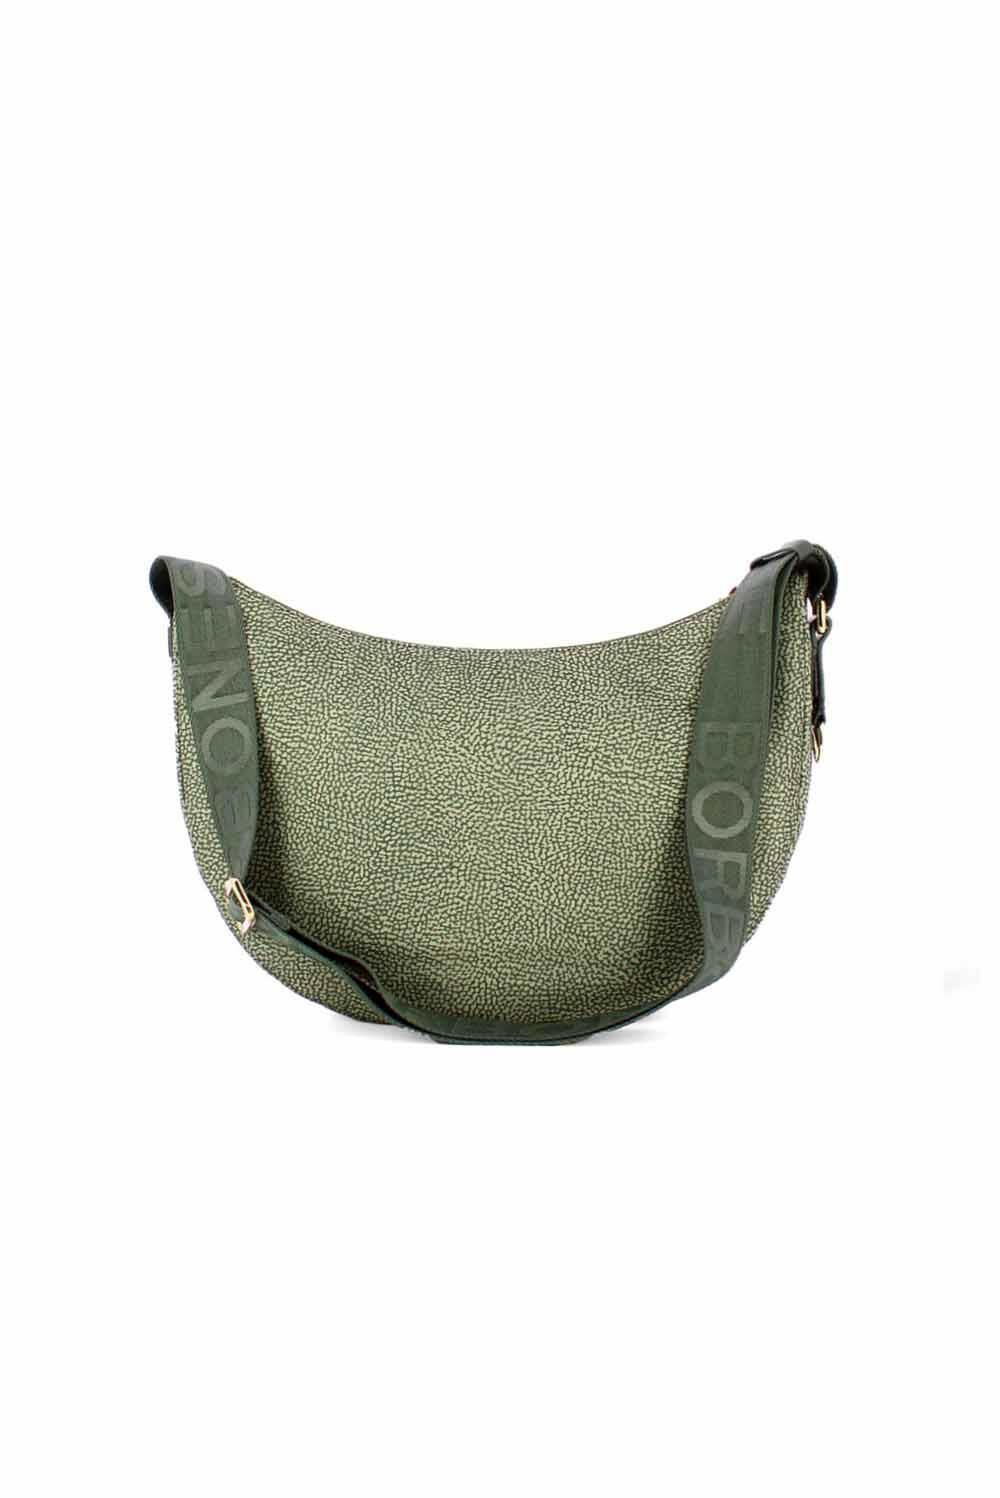  Borbonese Luna Bag Small Verde Militare Woman - 3